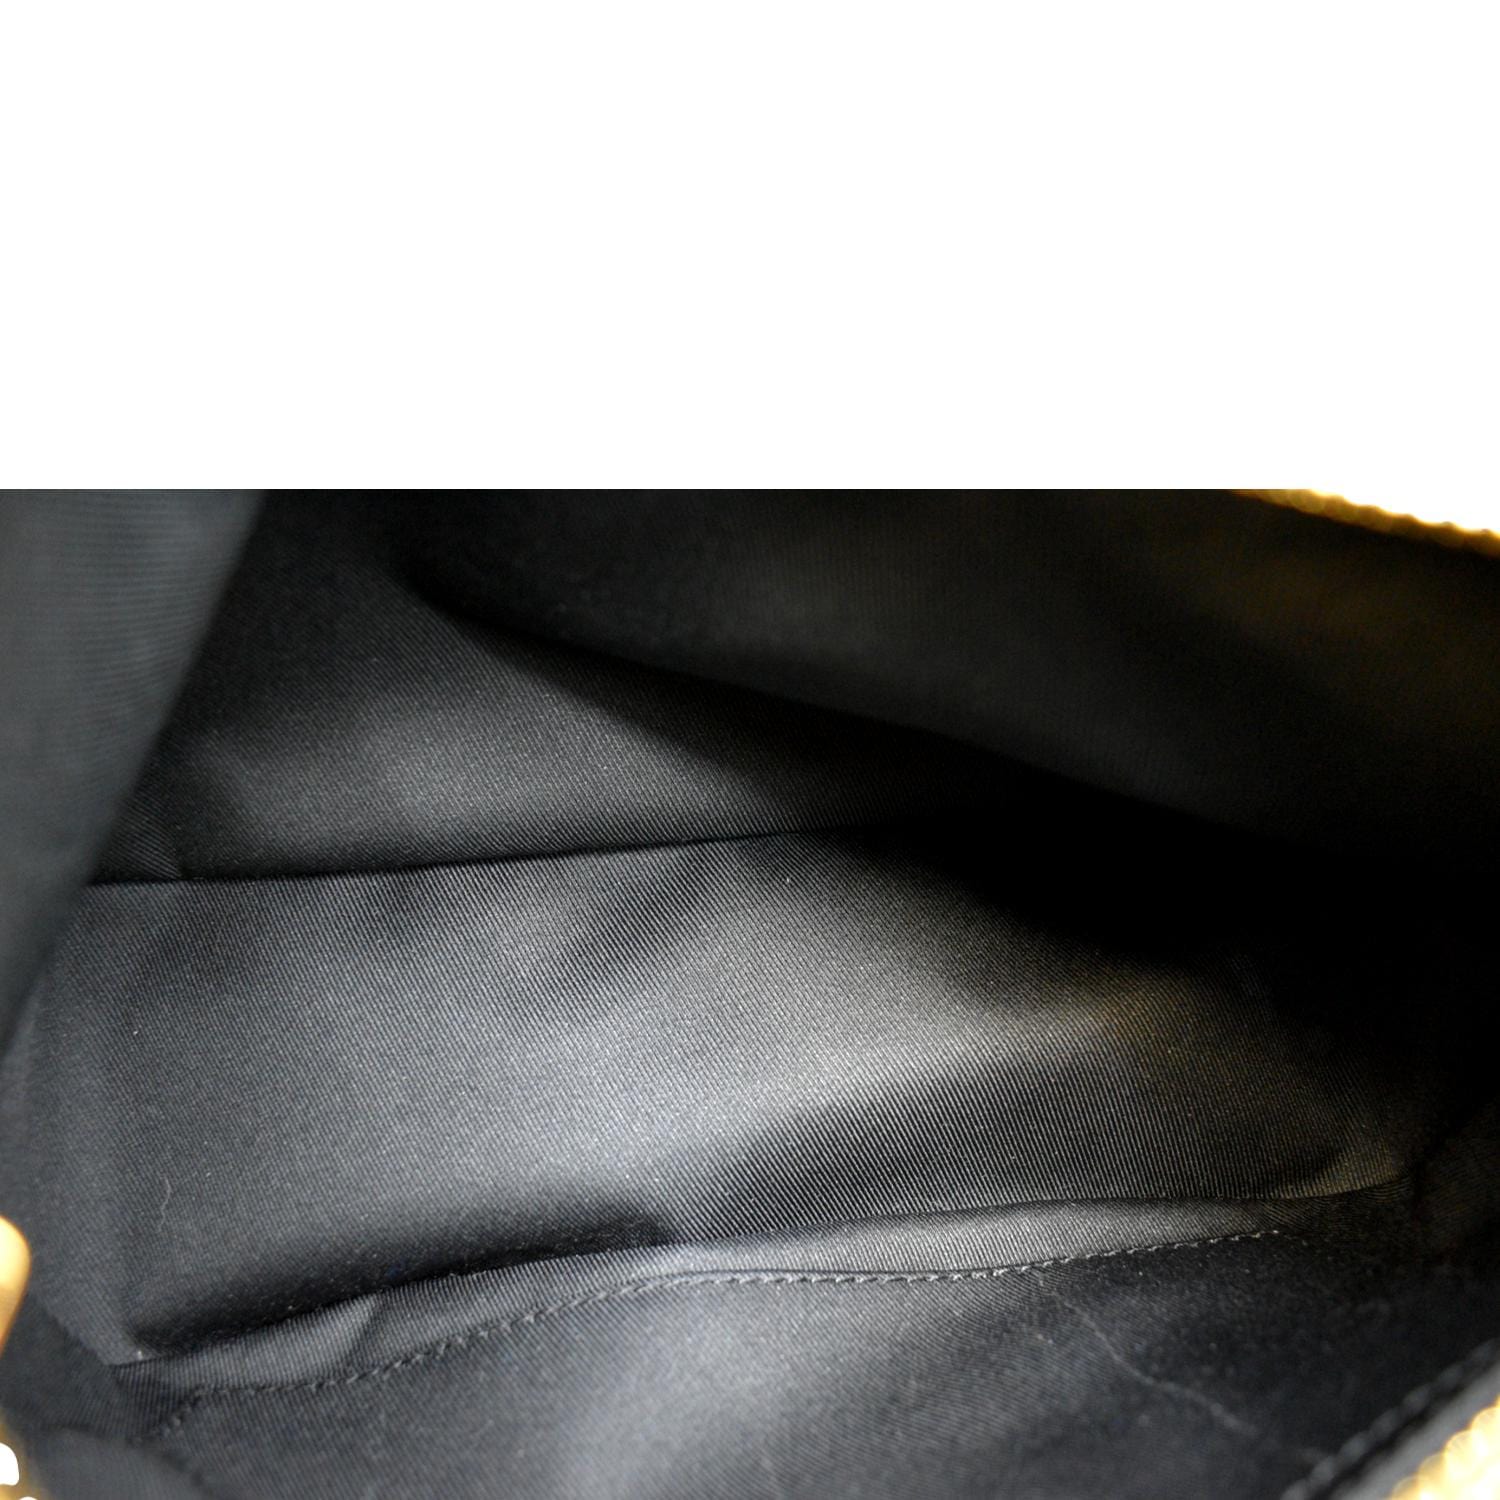 iCanvas Louis Dark Brown & Black Checkered Shopping Bag With